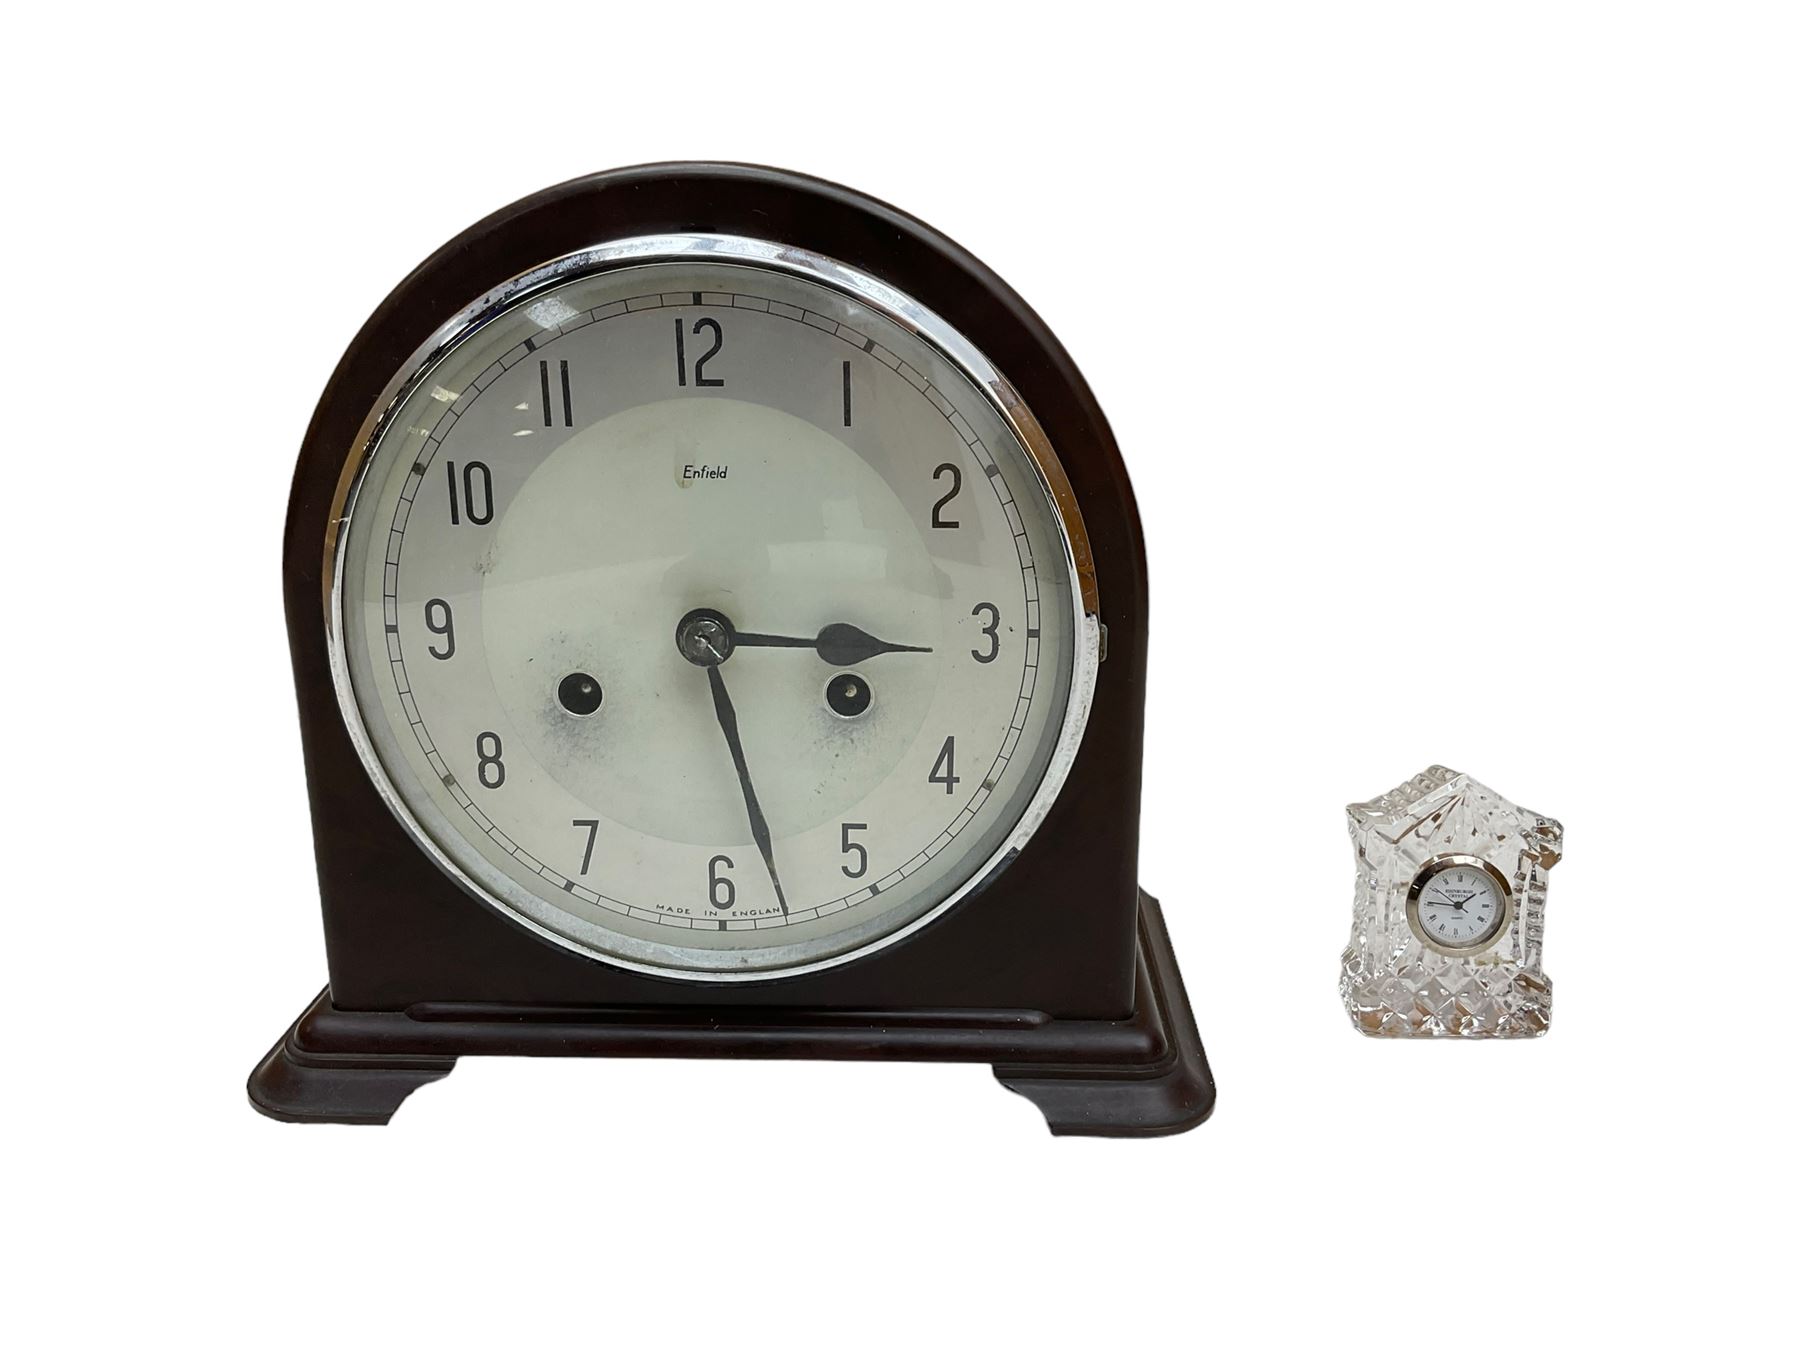 Enfield - 1930’s striking mantle clock in a Bakelite case